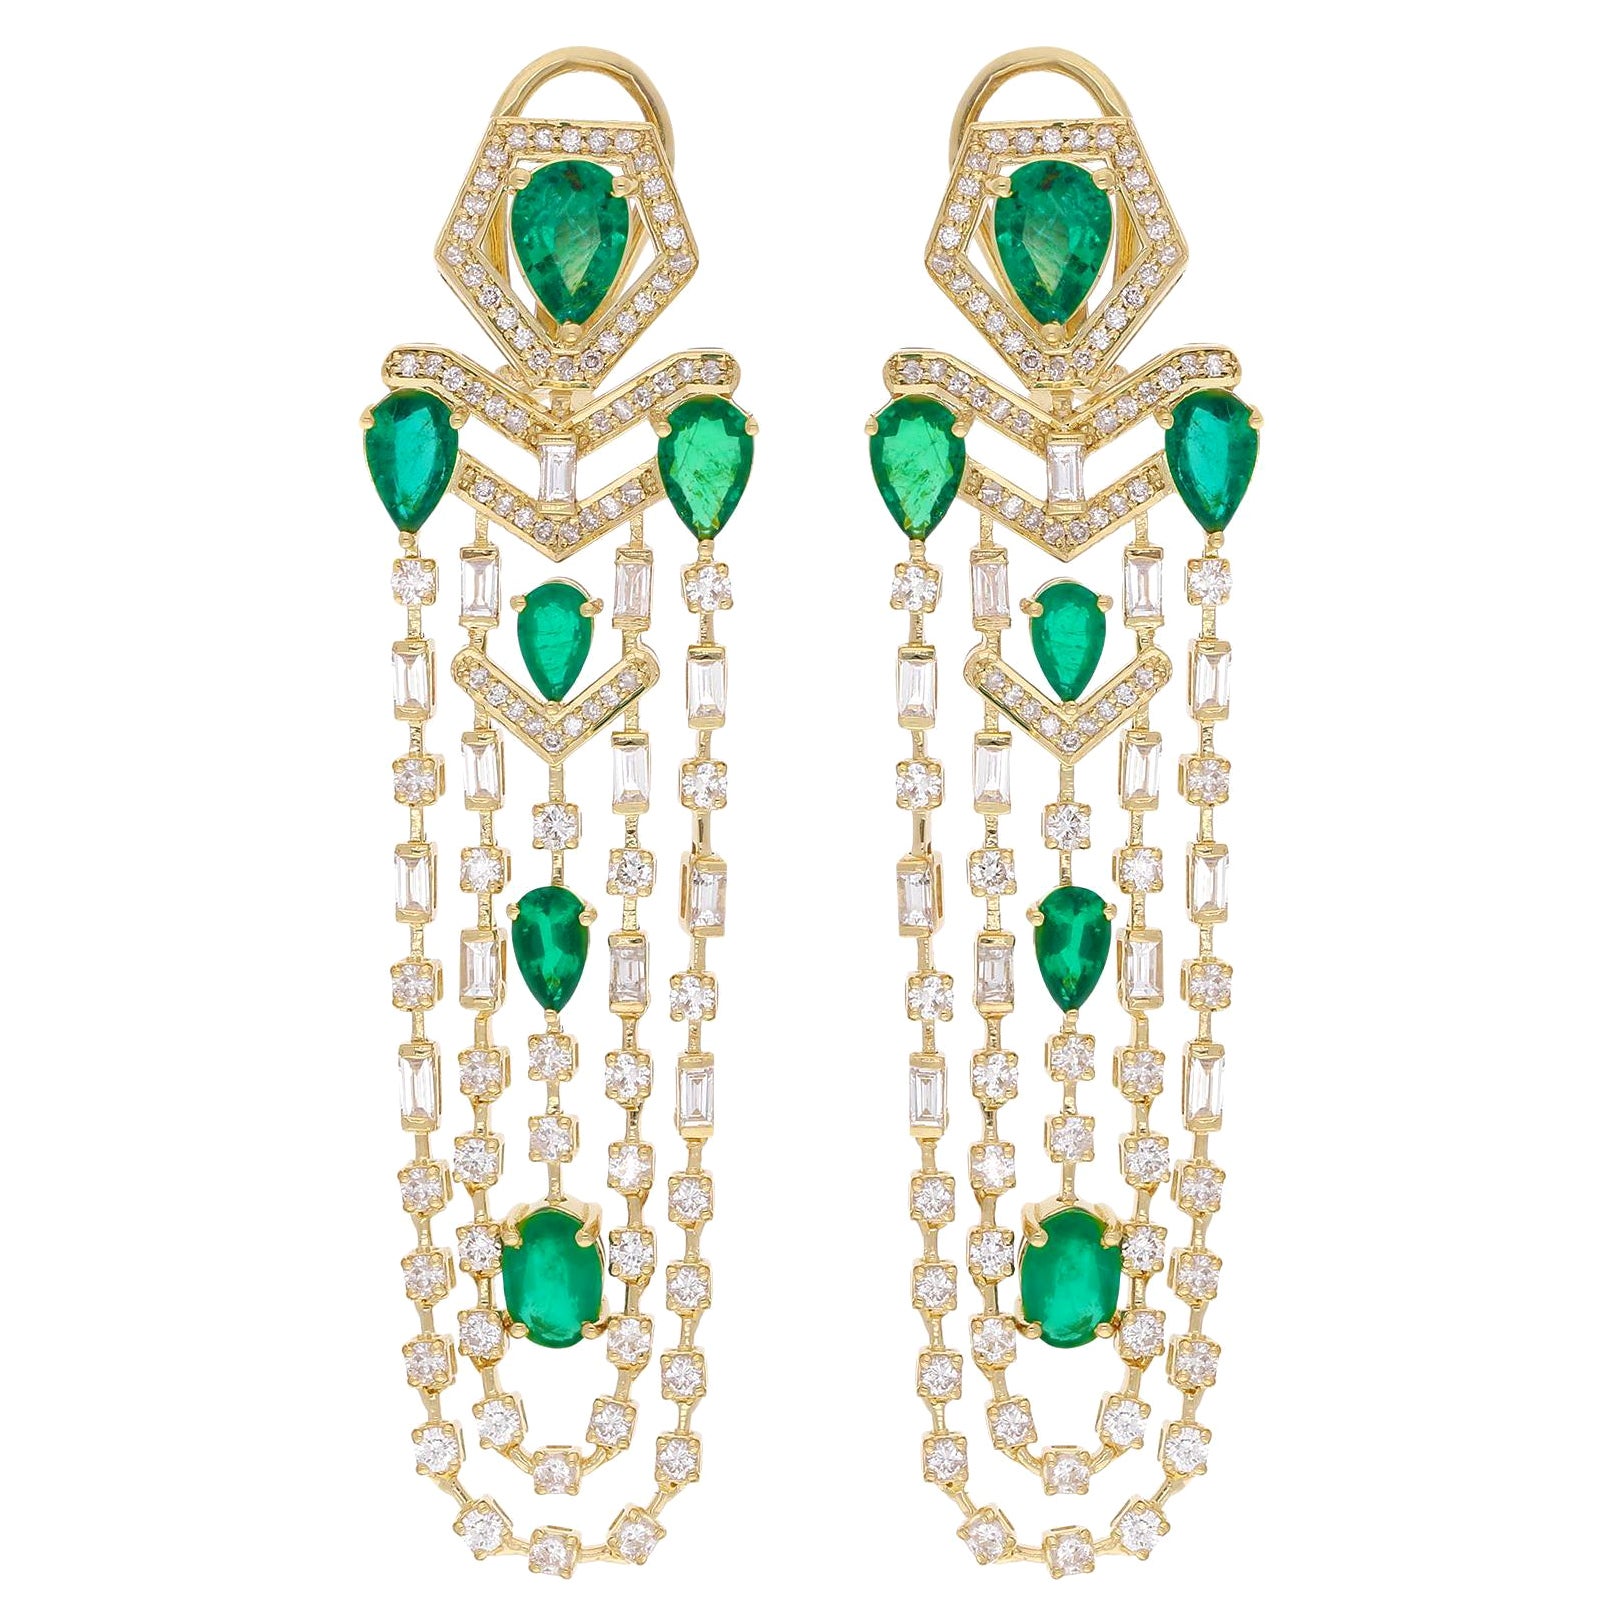 Oval & Round Emerald Gemstone Chandelier Earrings Diamond 14 Karat Yellow Gold